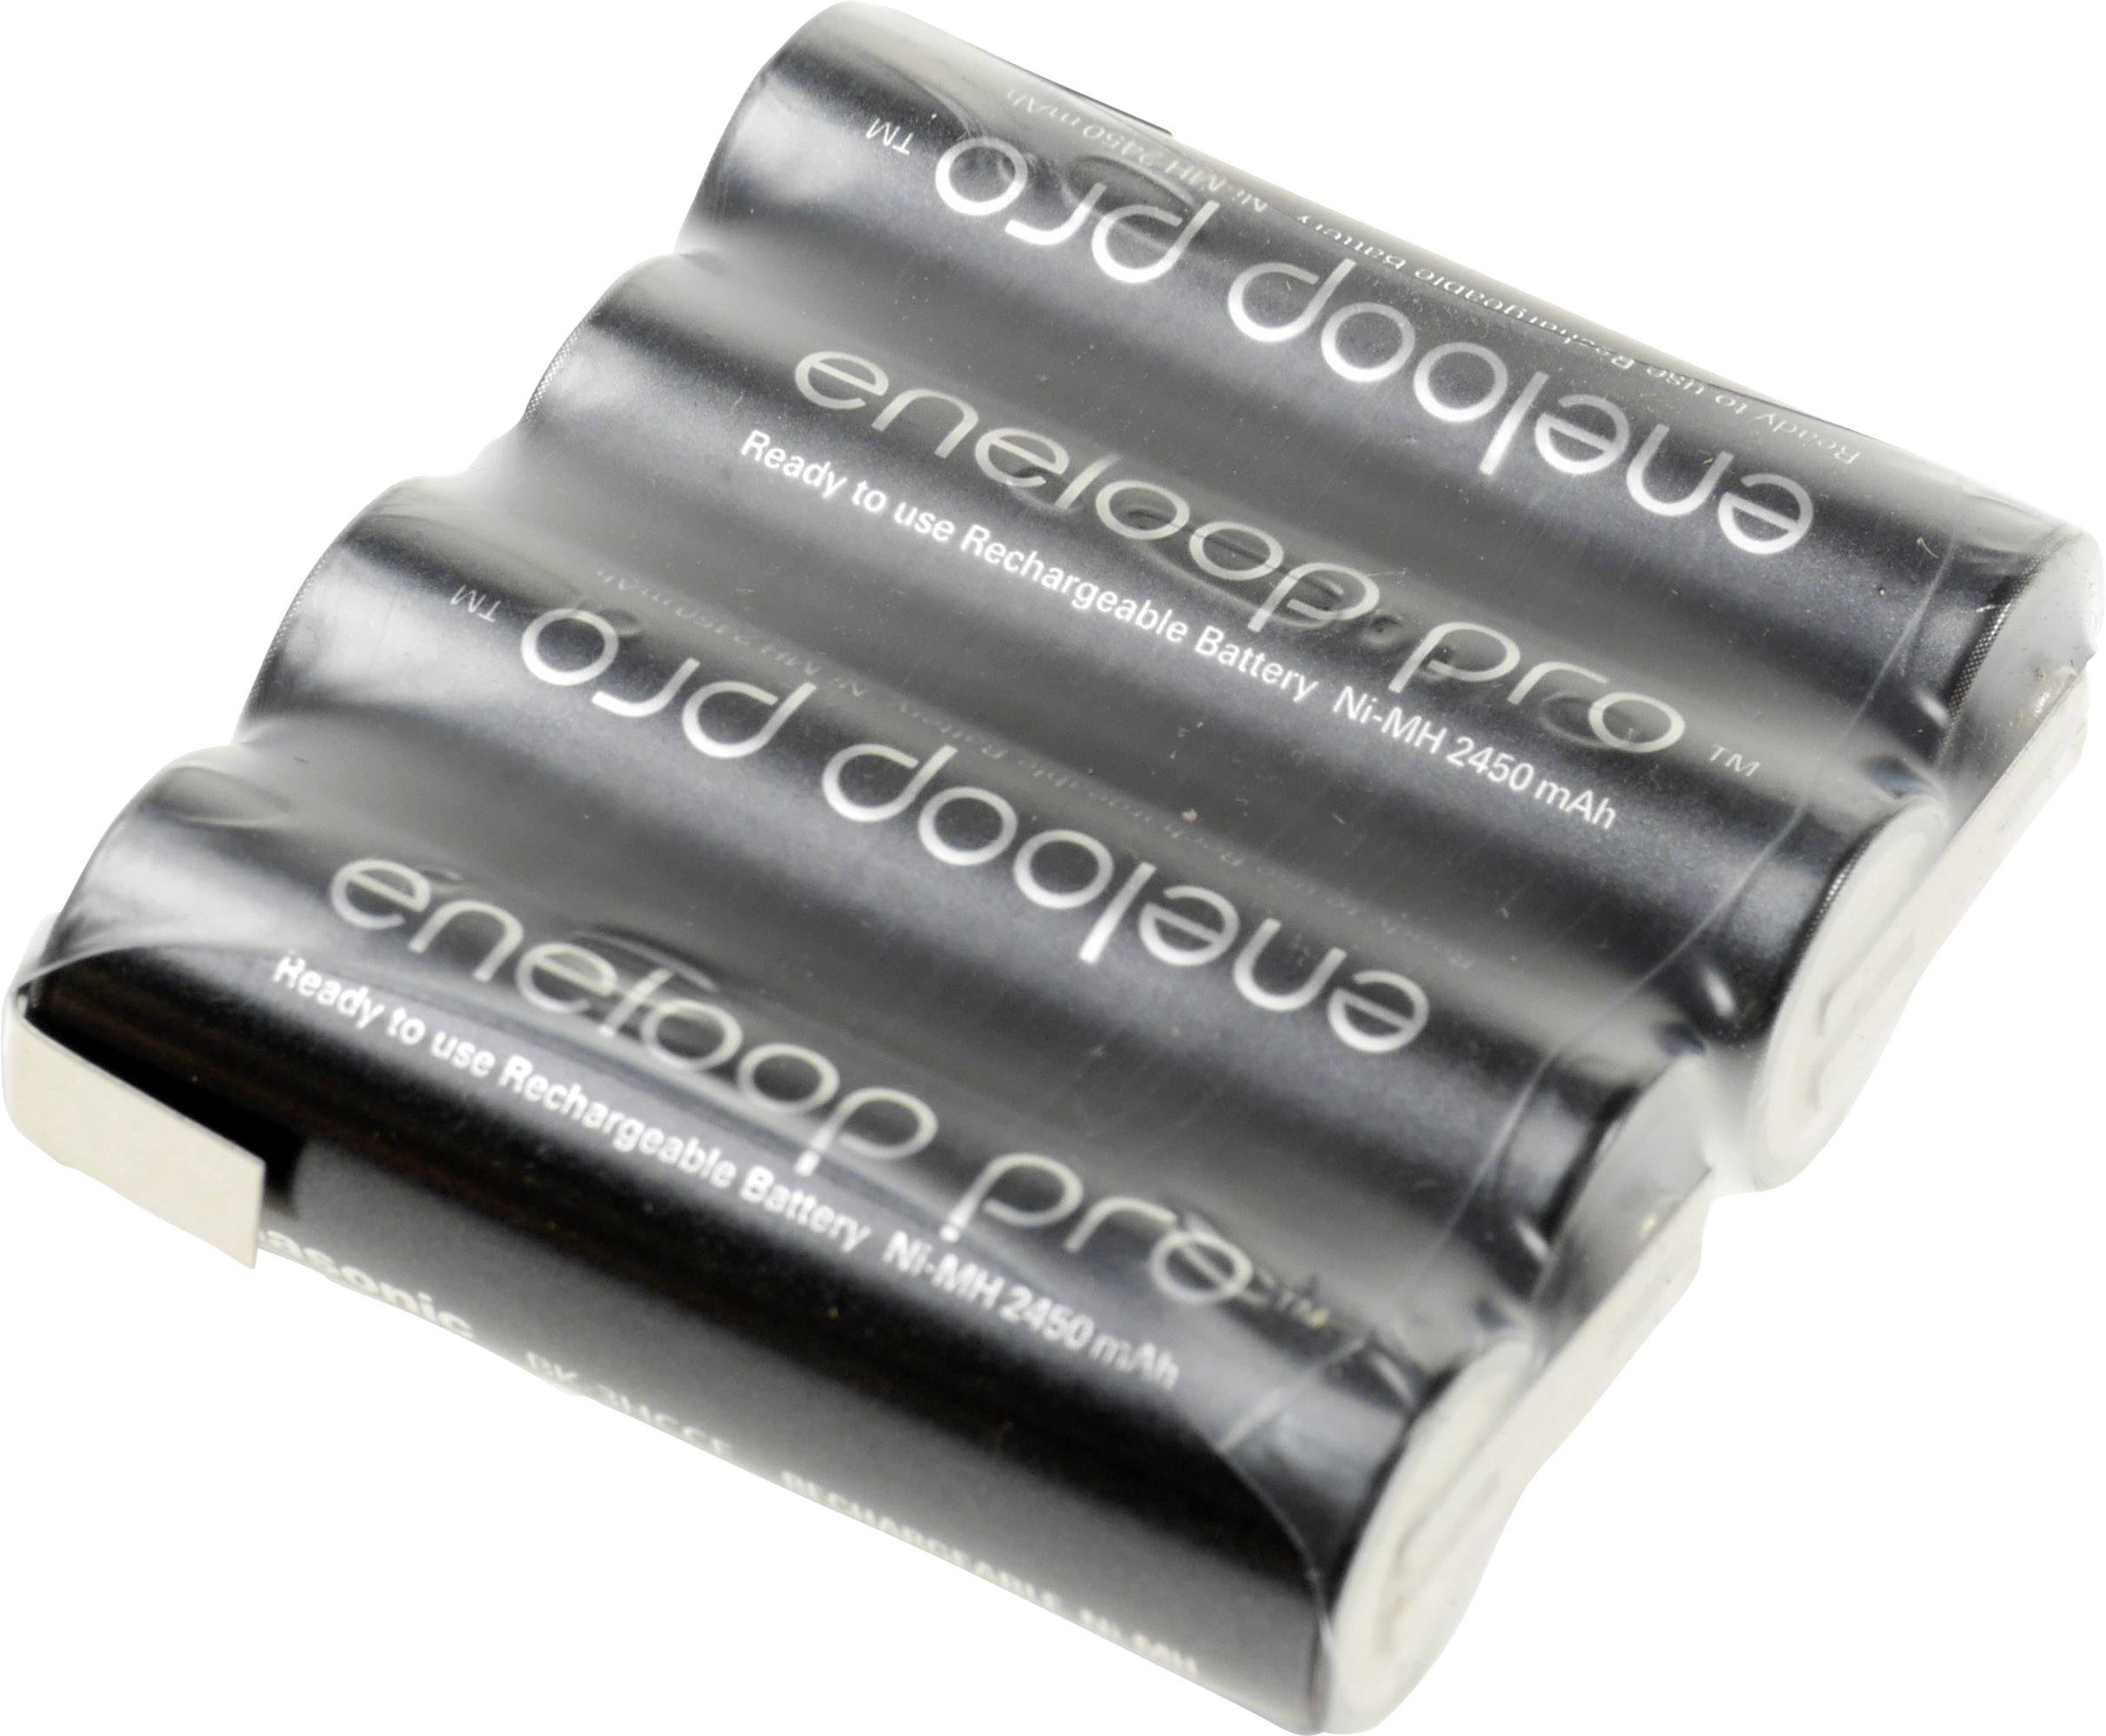 Sanyo eneloop Pro AA Mignon Battery (2450mAH, 4 Pieces) - Mindfield Shop -  Biofeedback & Neurofeedback